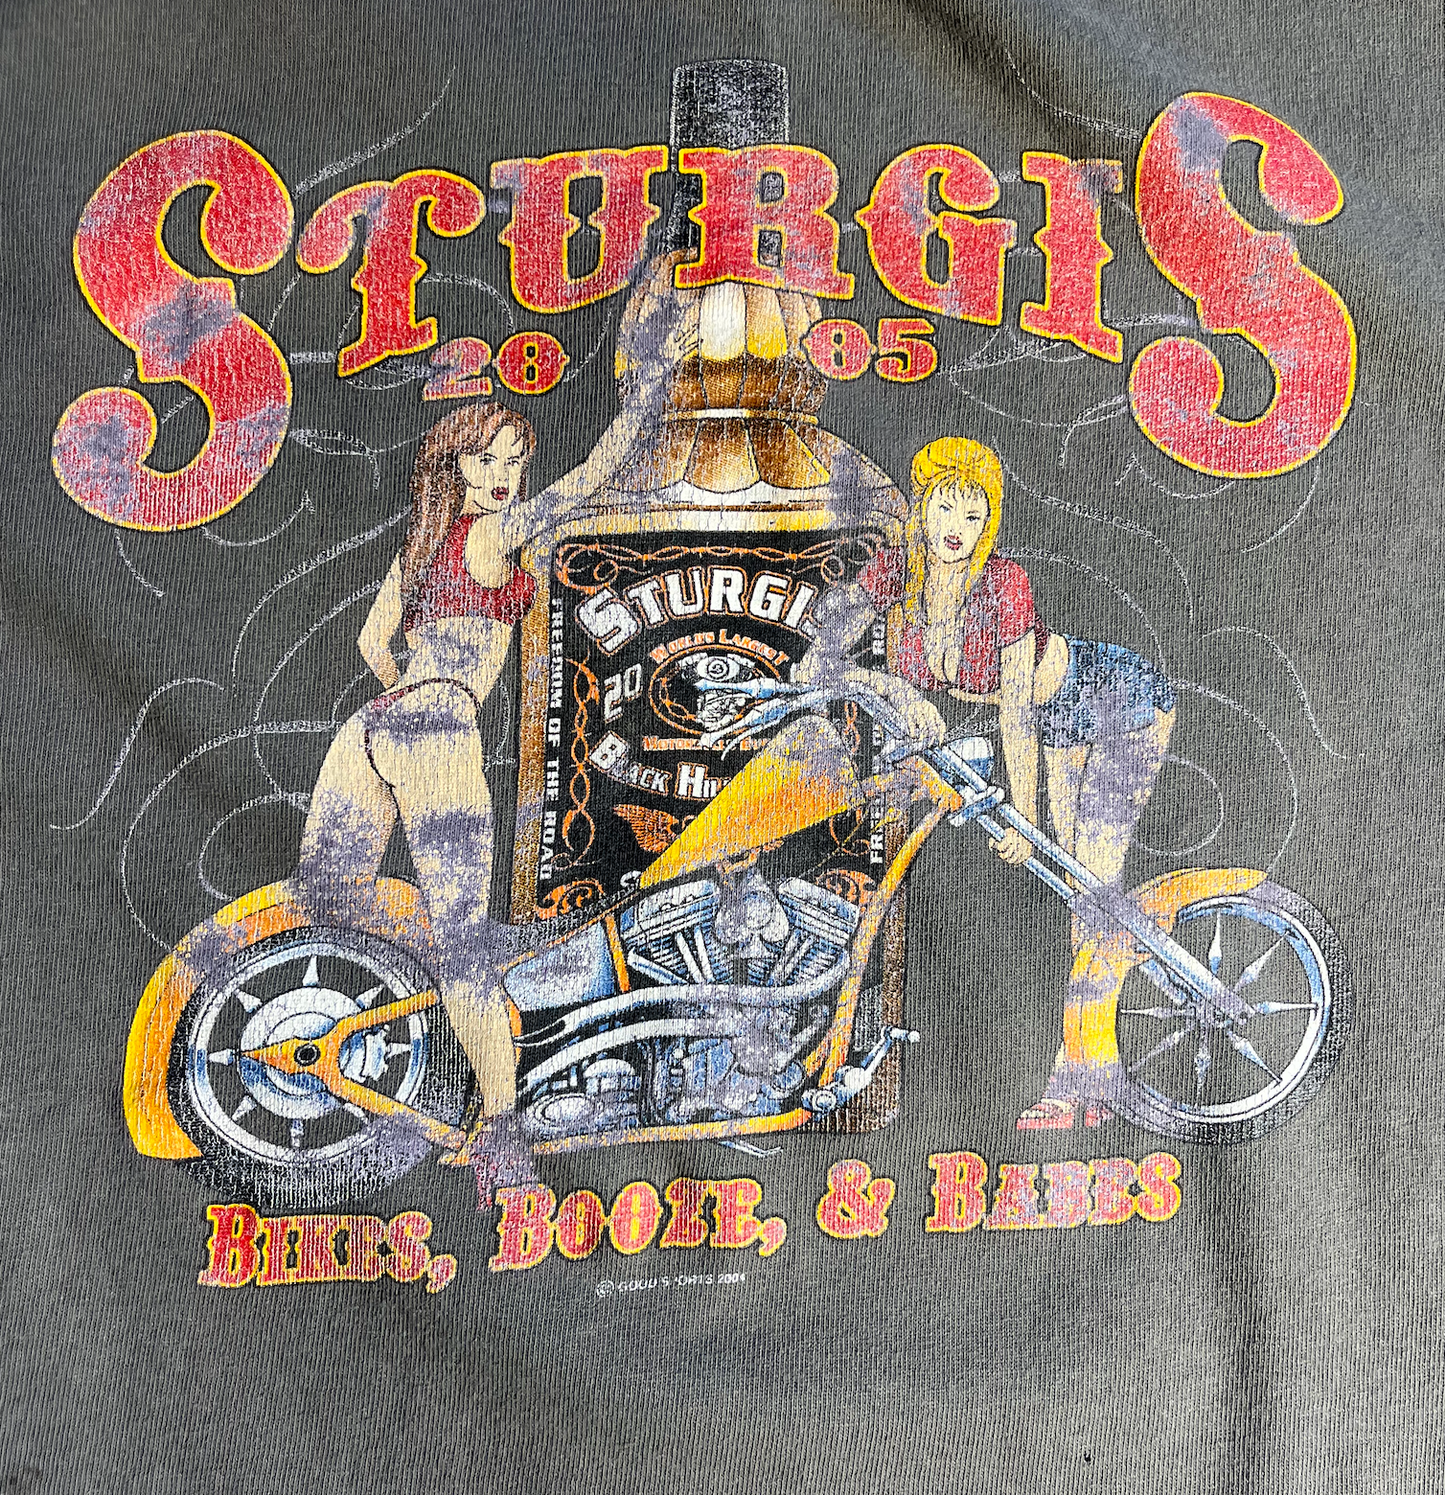 Vintage Sturgis Bikes T-Shirt